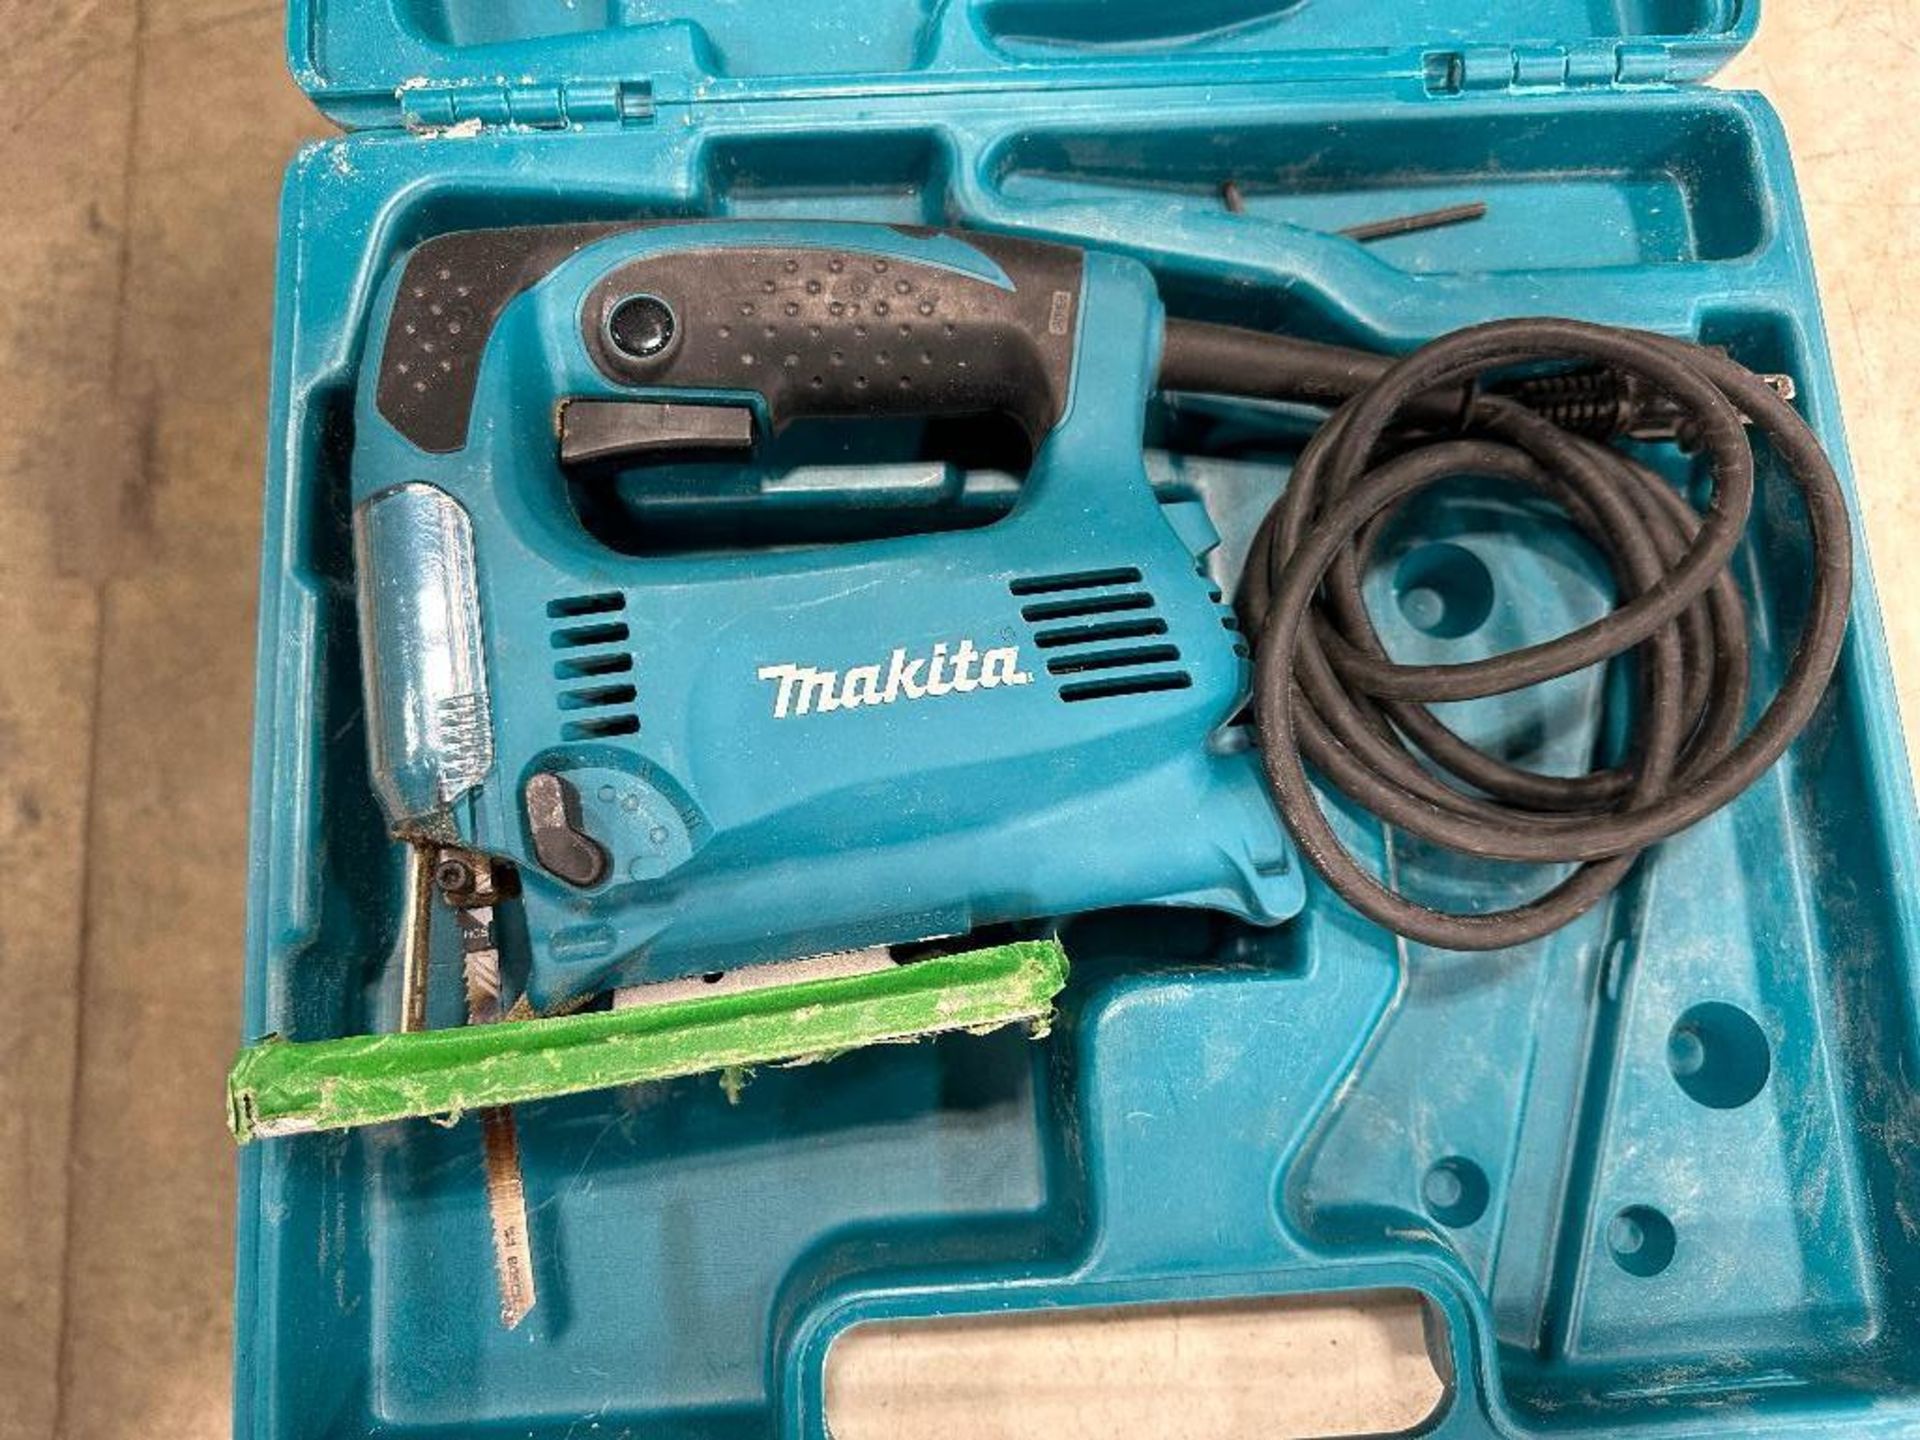 Makita 4329 Electric Jigsaw w/ Case - Image 3 of 4